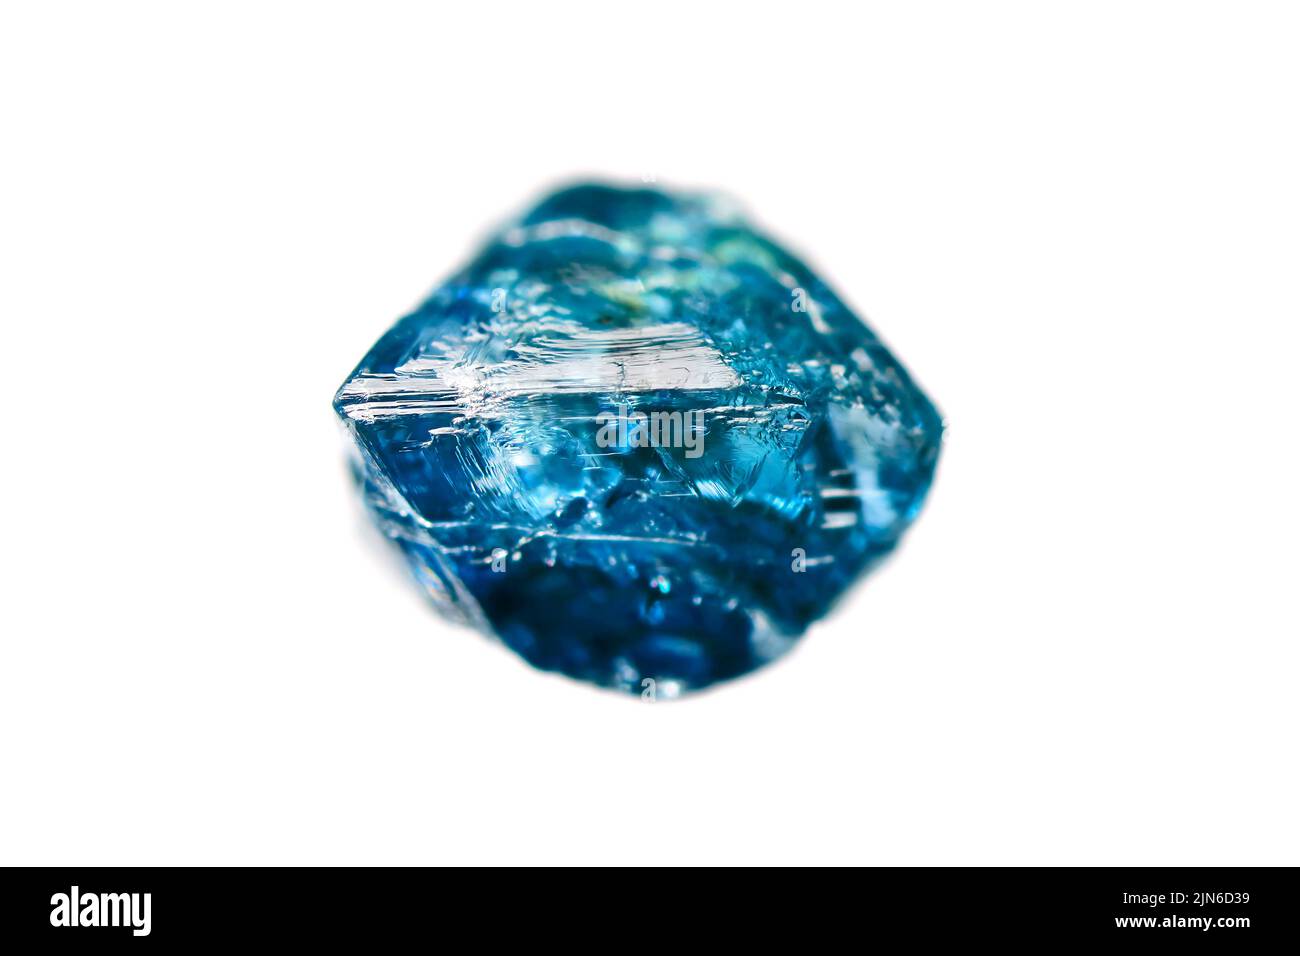 Rare rough uncut blue diamond crystal on white background Stock Photo